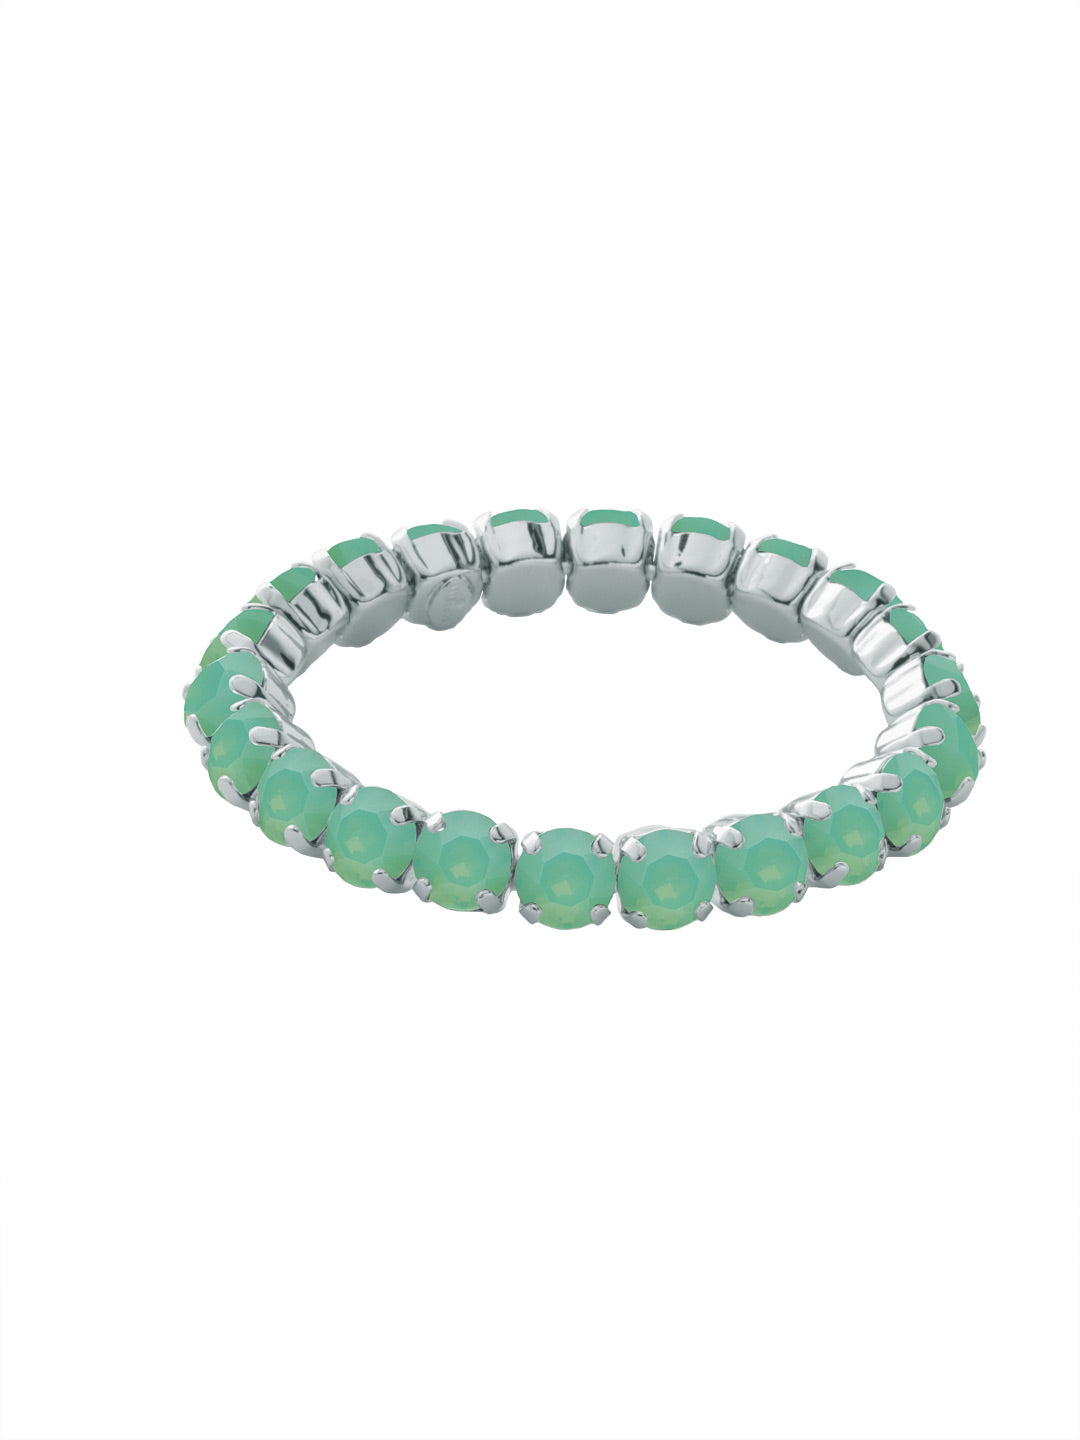 Product Image: 7 inch Sienna Stretch Bracelet